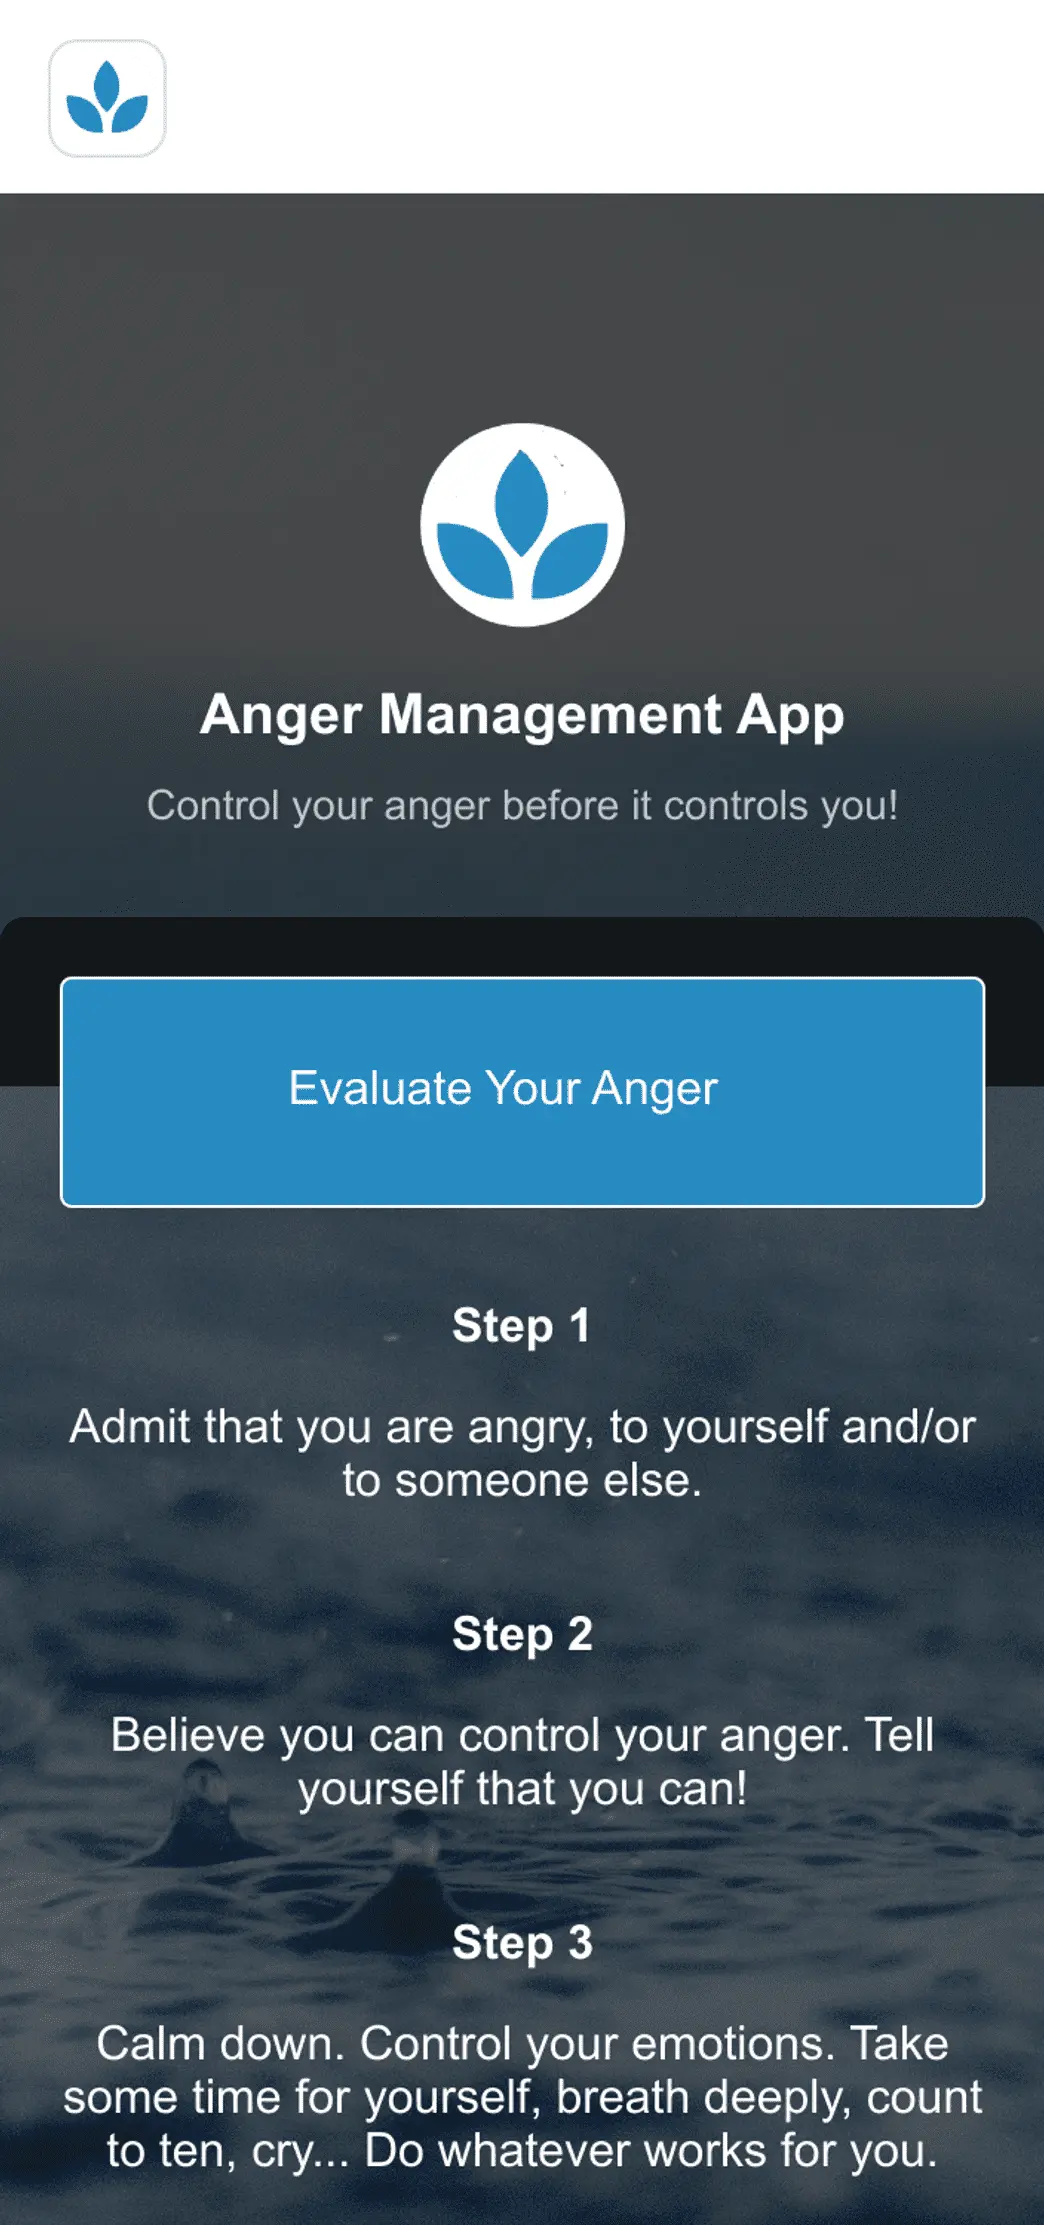 Anger Management App